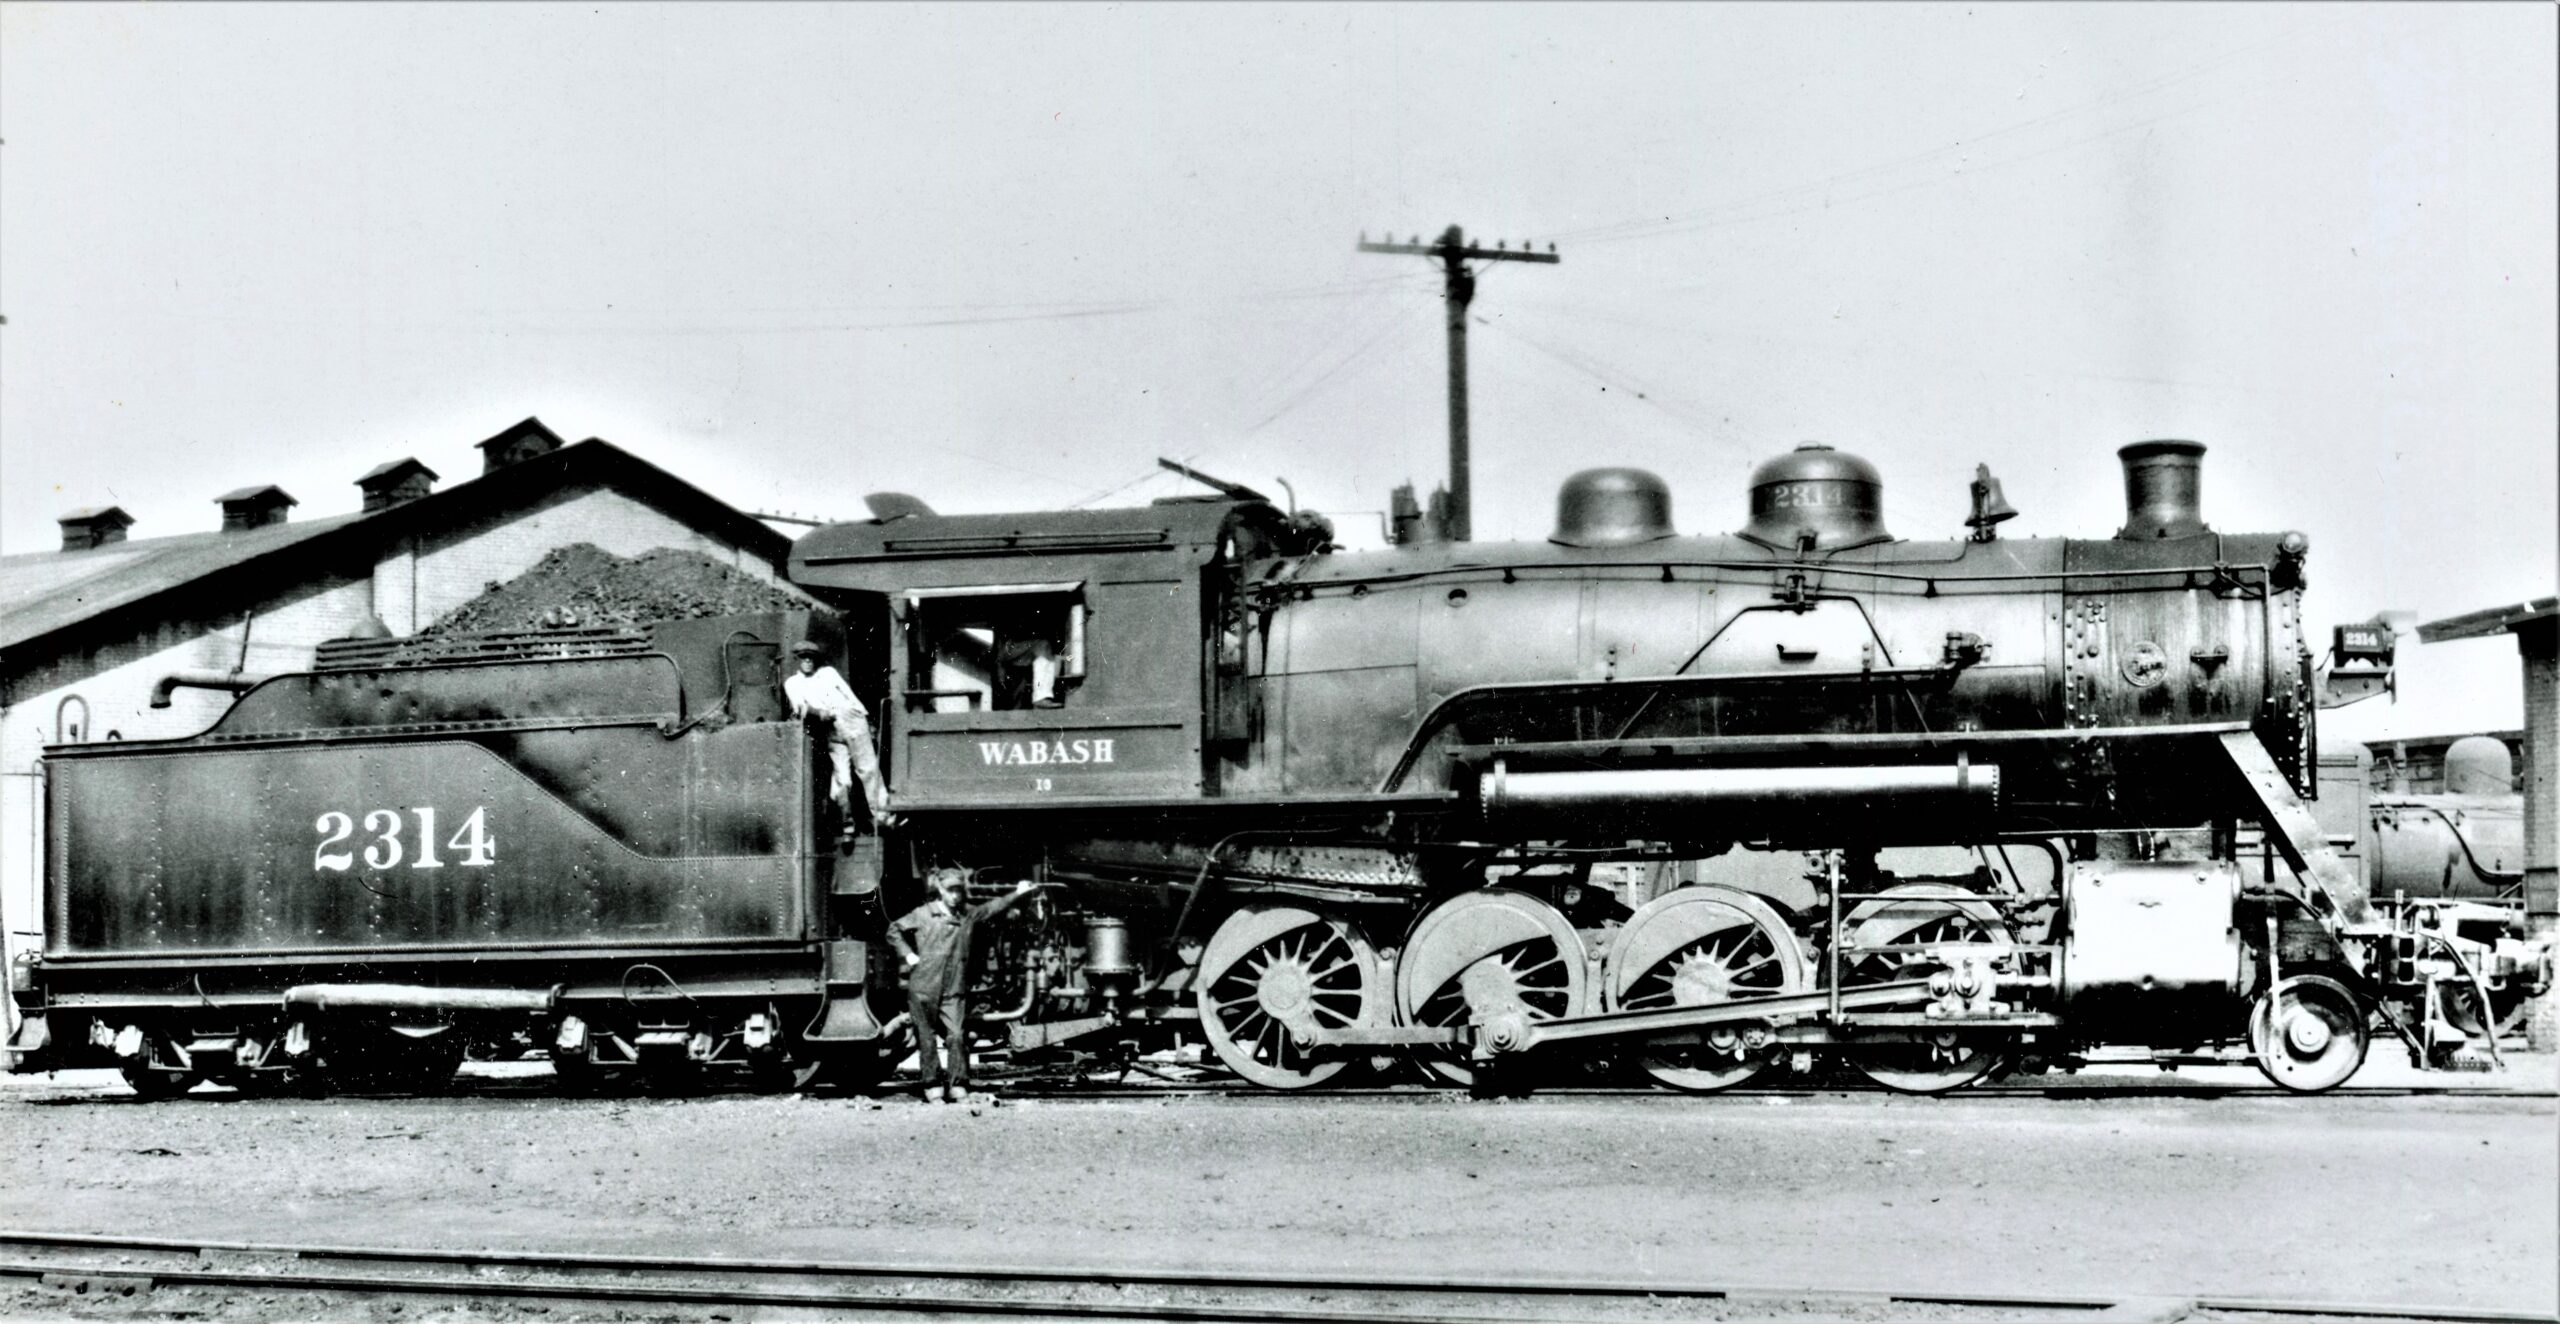 Wabash Railroad | Springfield, Illinois | Class I-3 2-8-0 #2314 steam locomotive | August 1927 | Harold Vollrath photograph collection | Elmer Kremkow Collection